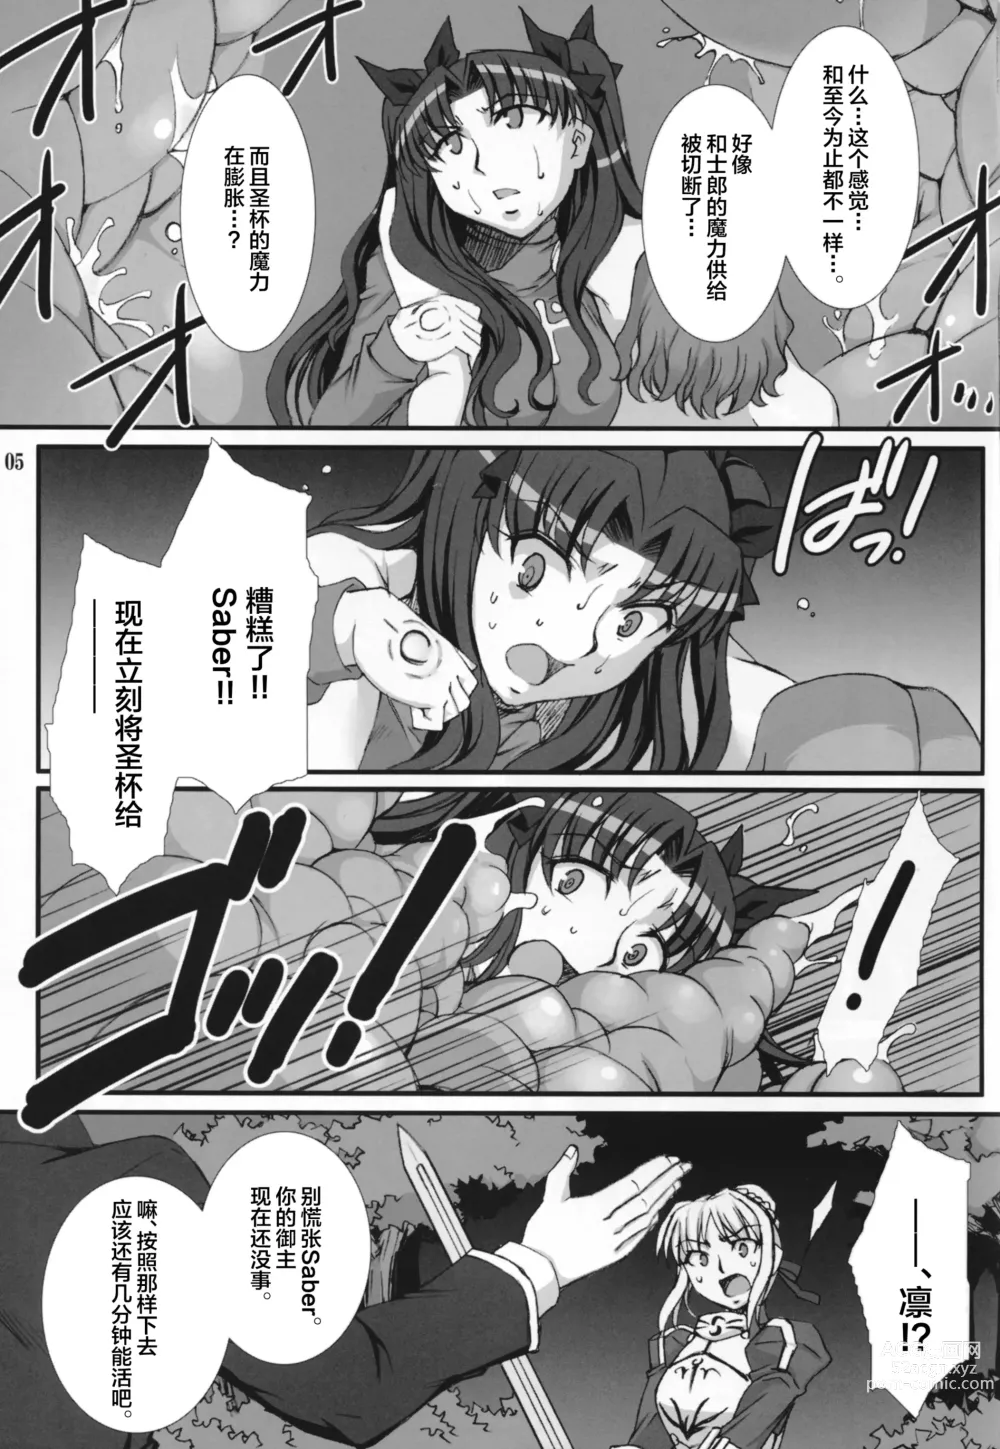 Page 5 of doujinshi Rin Kai -Kegasareta Aka-